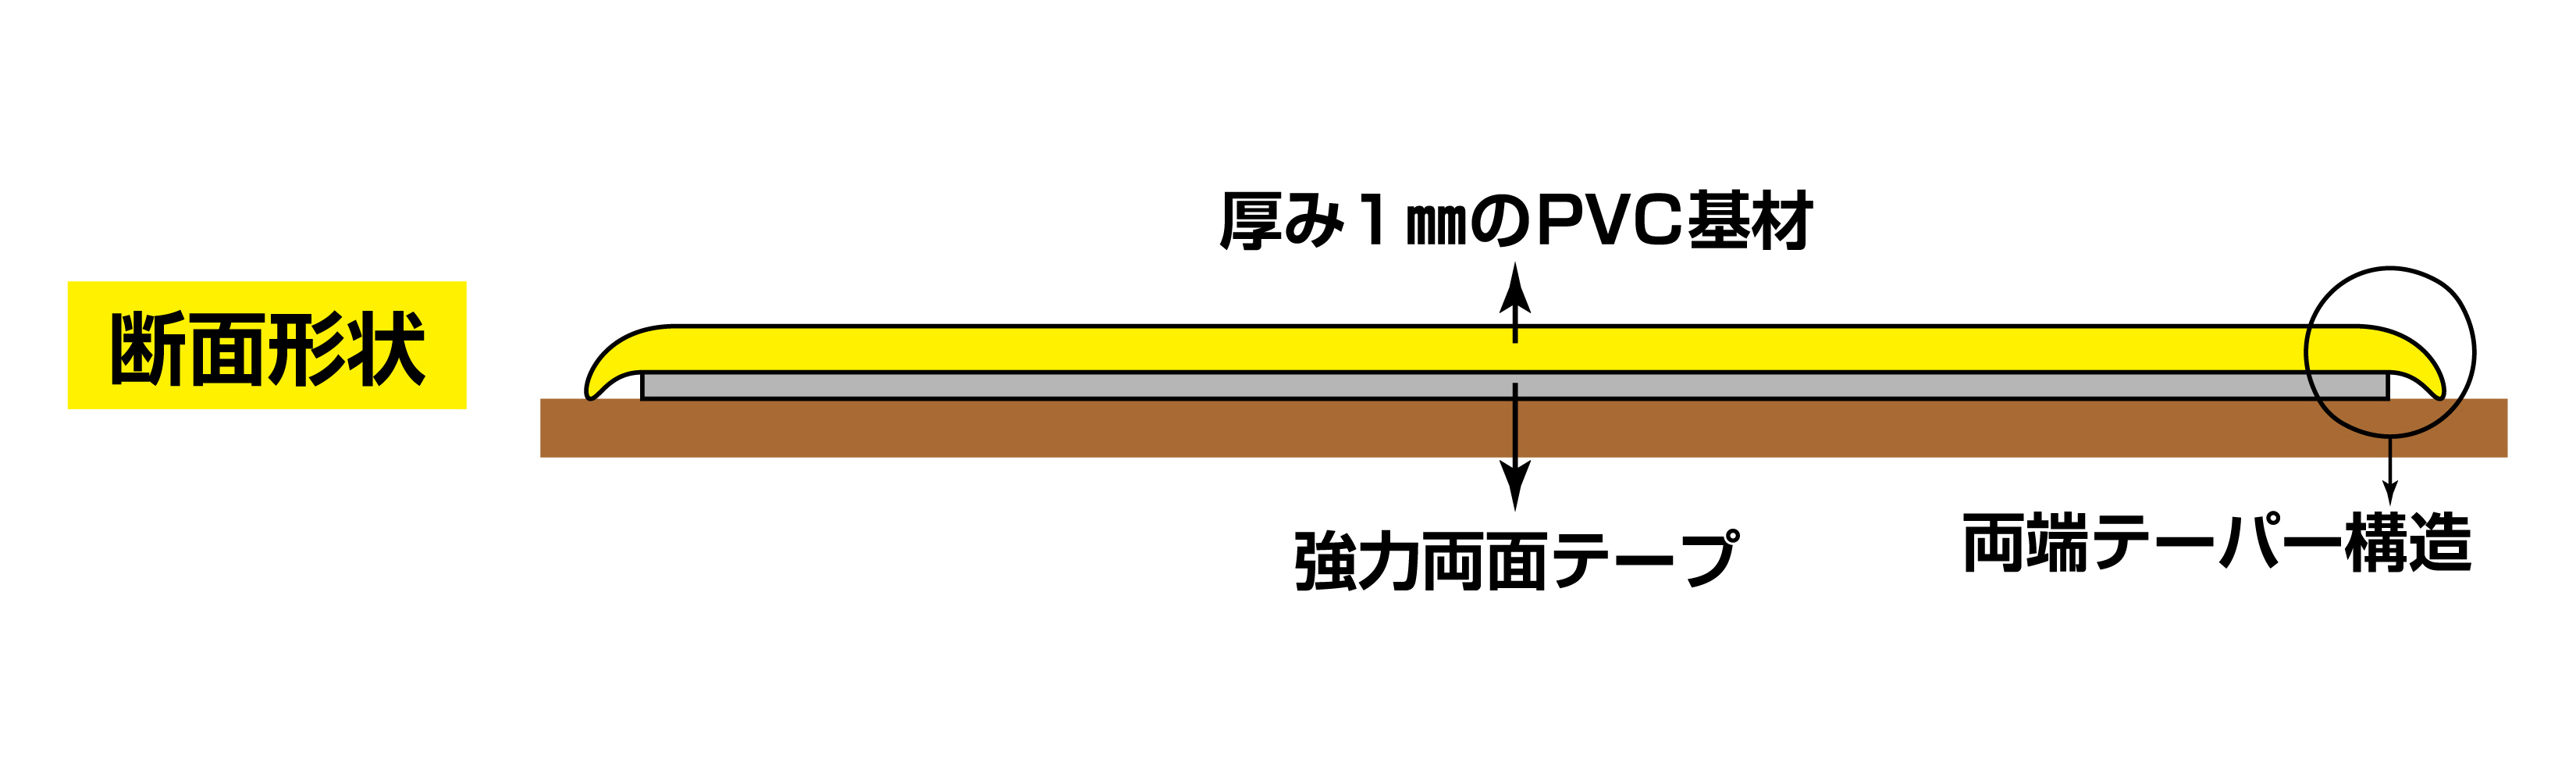 高耐久ラインテープ 403081 JU-1010W,（安全標識・安全用品 日本緑十字